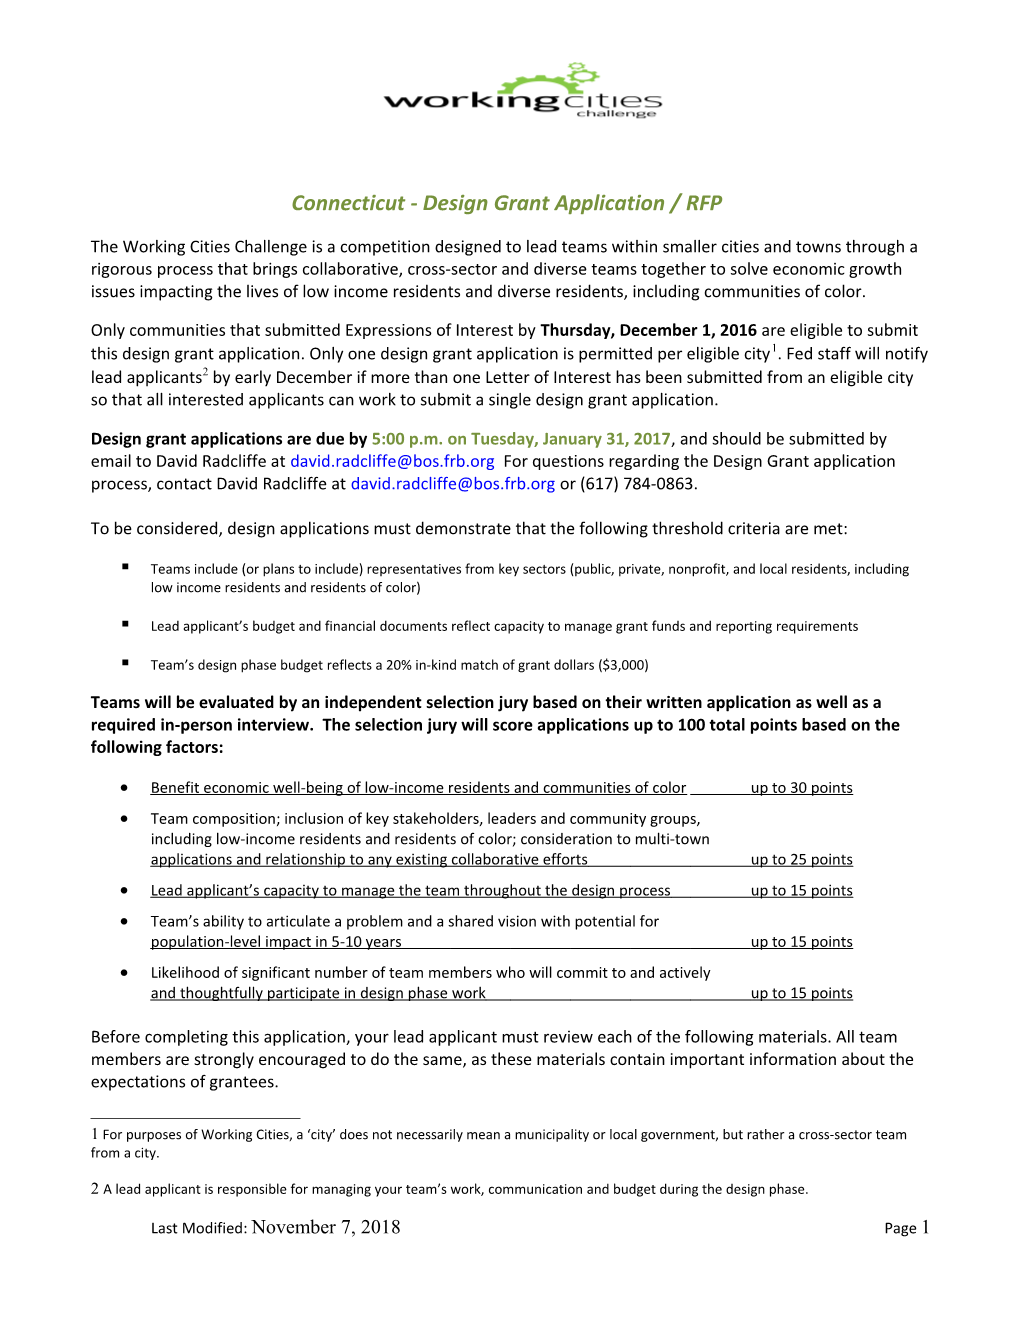 Connecticut- Design Grant Application / RFP